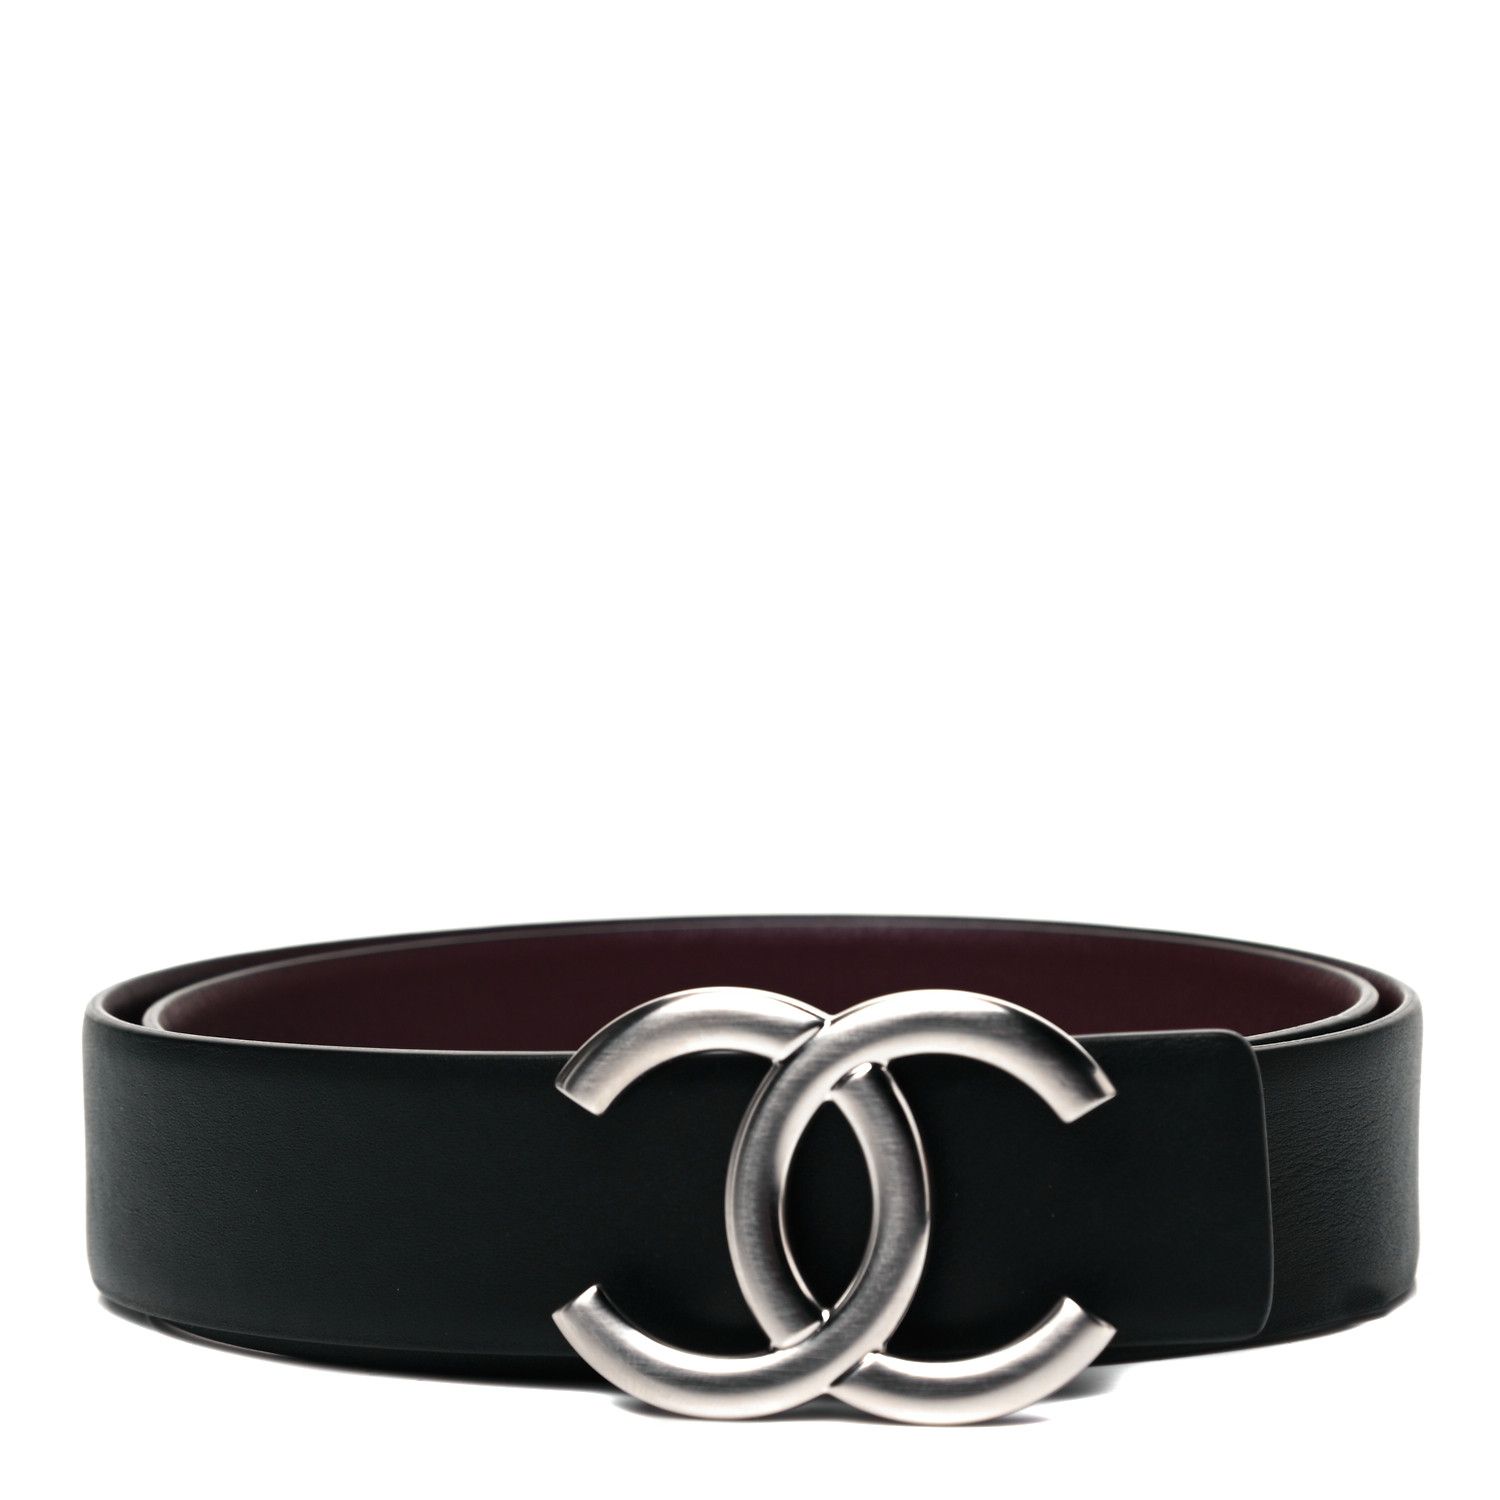 CHANEL Calfskin CC Reversible Belt 75 30 Black Burgundy | FASHIONPHILE | Fashionphile